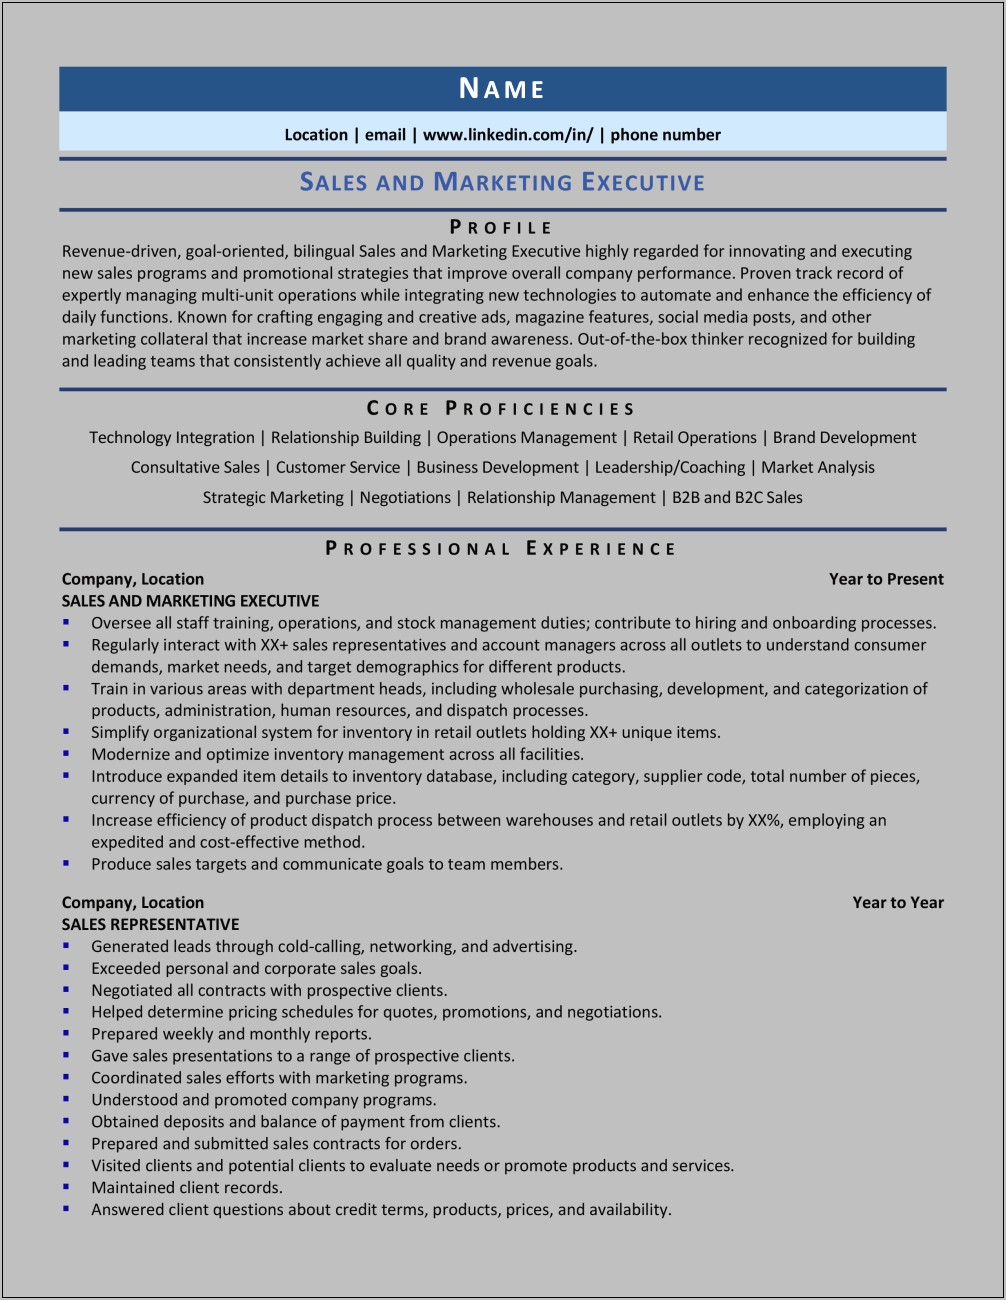 Resume Objective Statement Vs Executive Summary